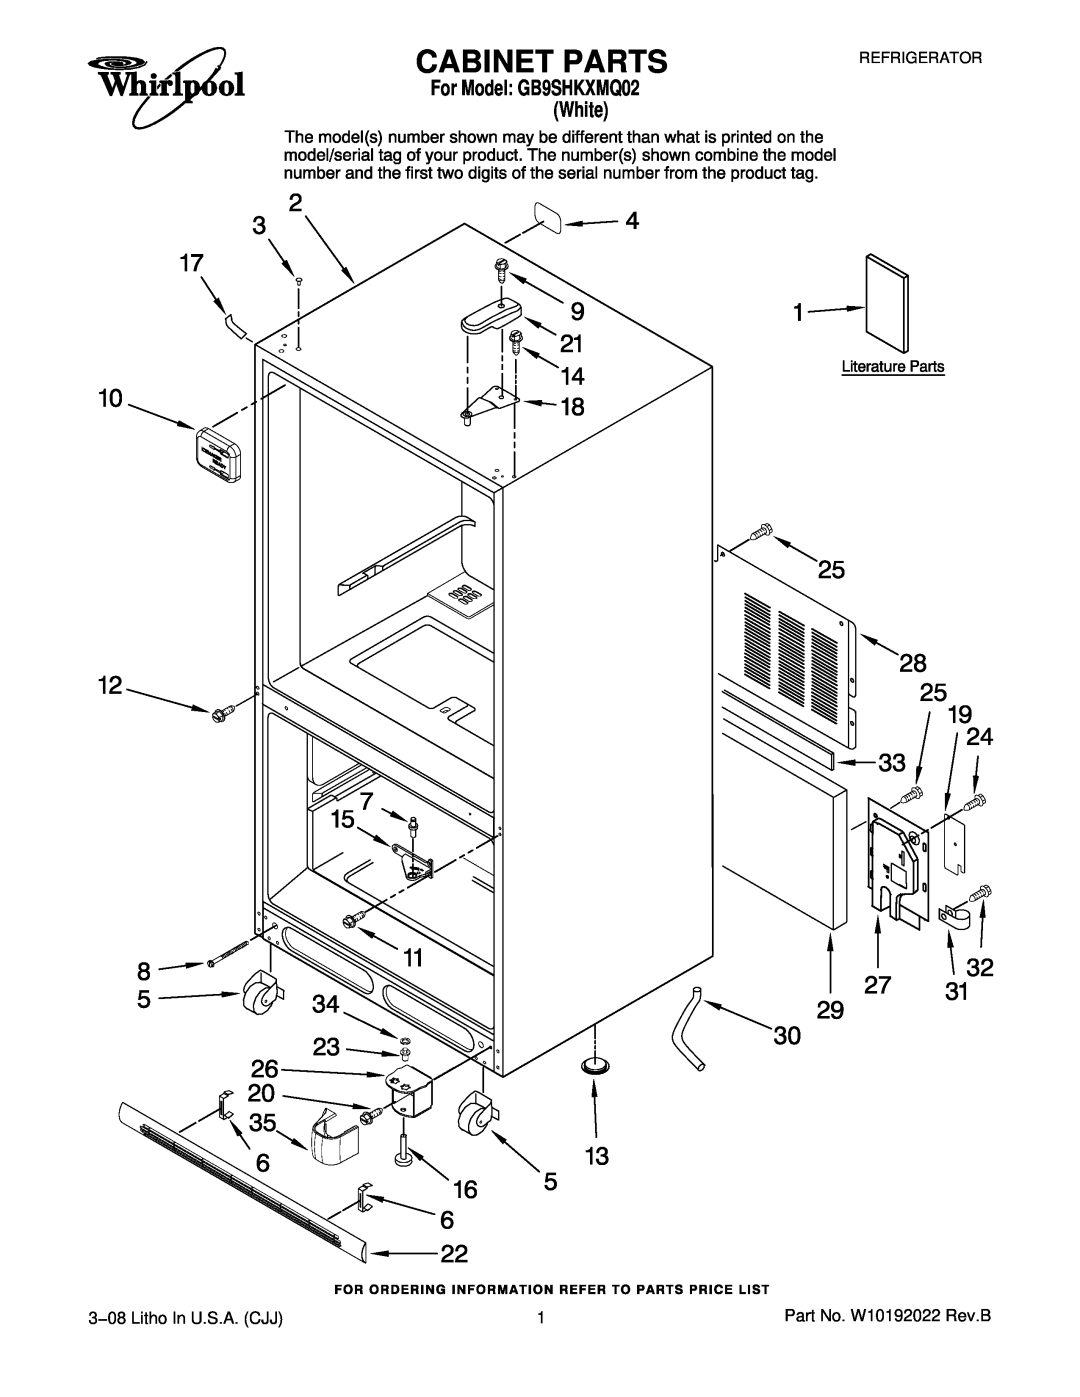 Whirlpool manual Cabinet Parts, 3−08 Litho In U.S.A. CJJ, For Model GB9SHKXMQ02 White, Refrigerator 